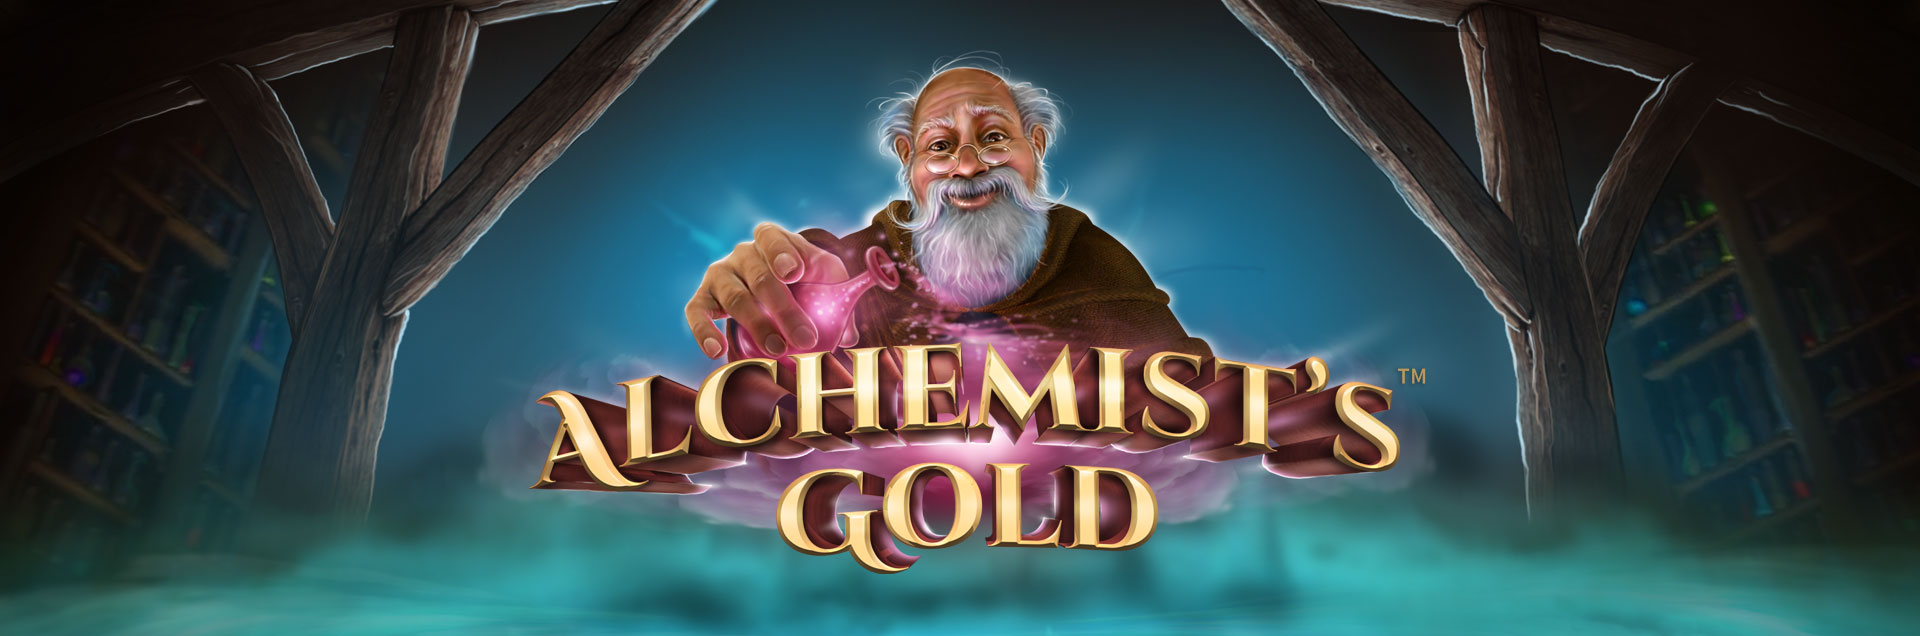 AlchemistGold logo